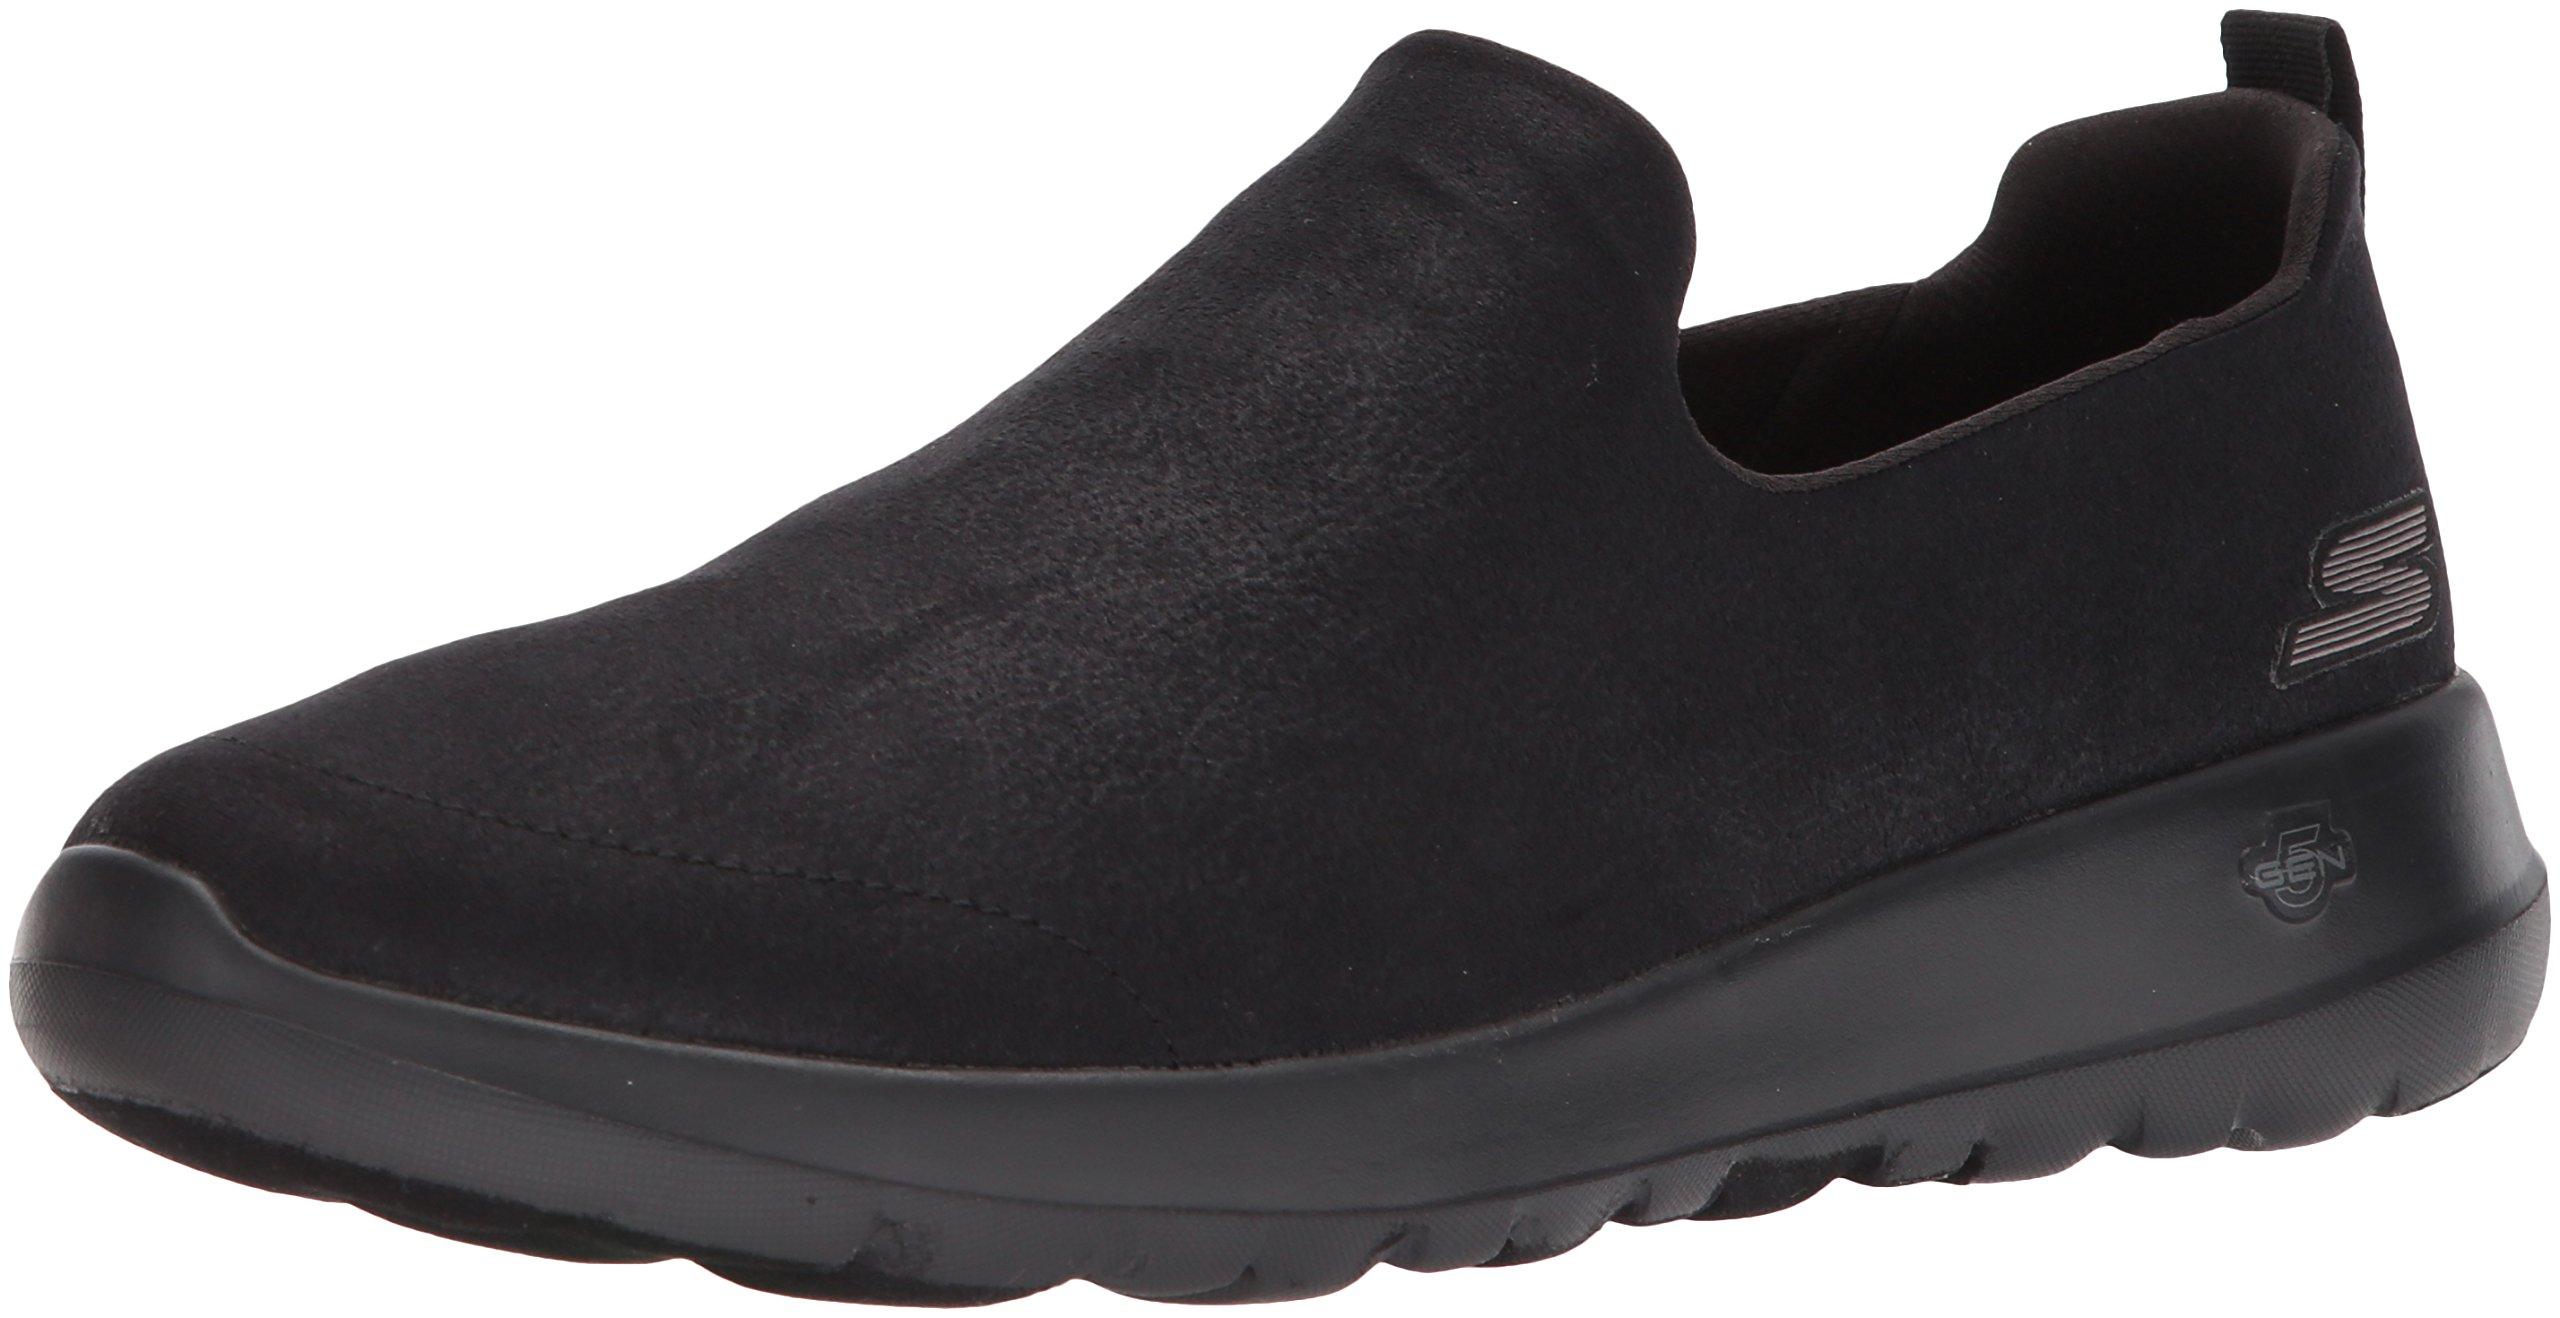 Skechers Leather Go Walk Max- Escalate Sneaker in Black for Men - Lyst